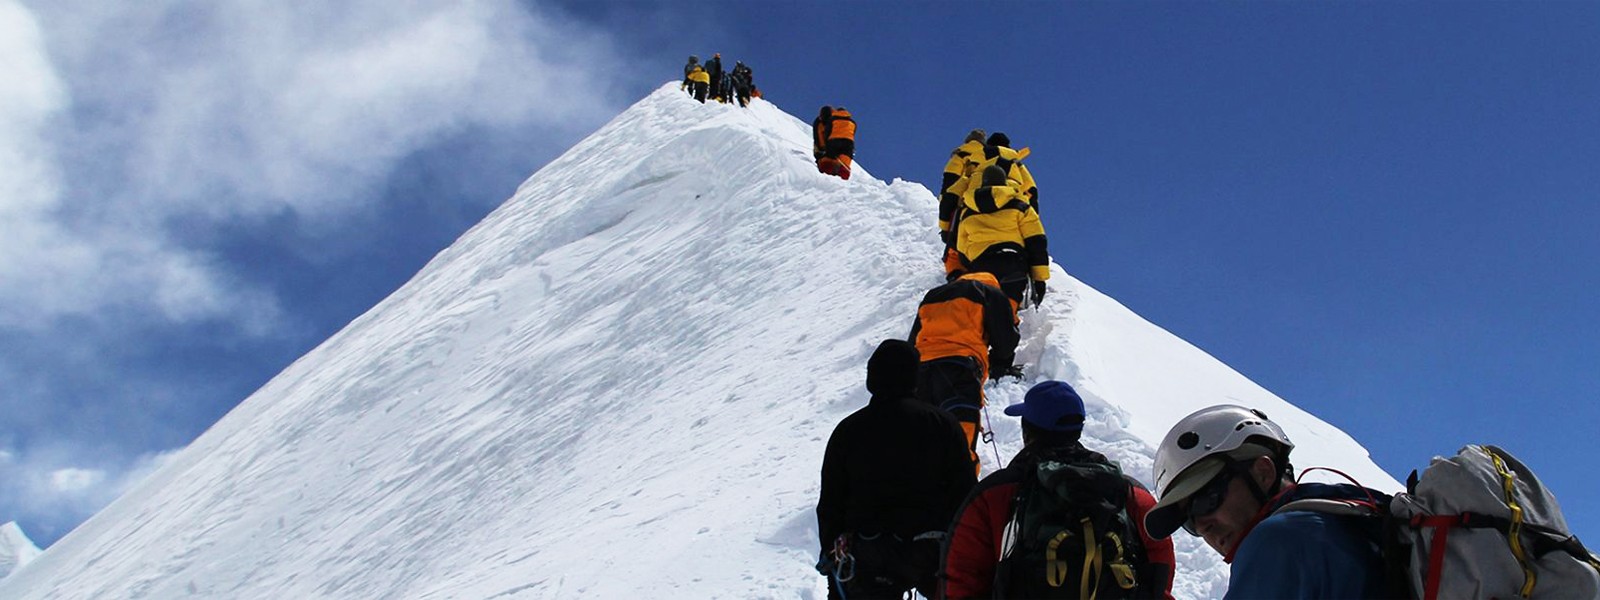 Island Peak - Imja-tse Climbing in Nepal